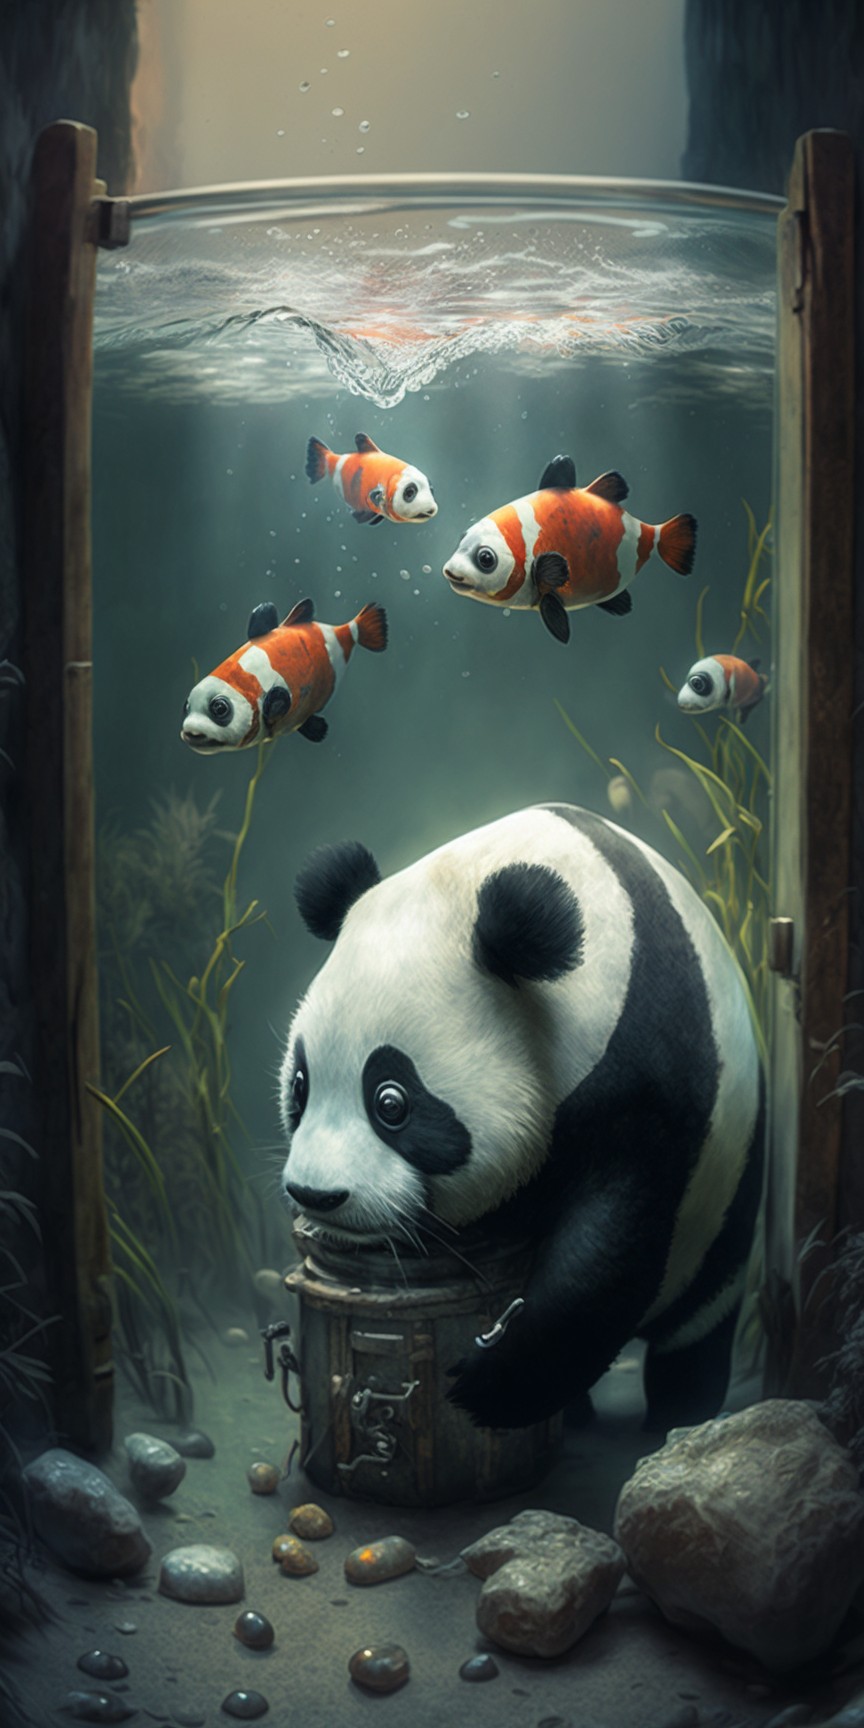 Panda catching fish in water